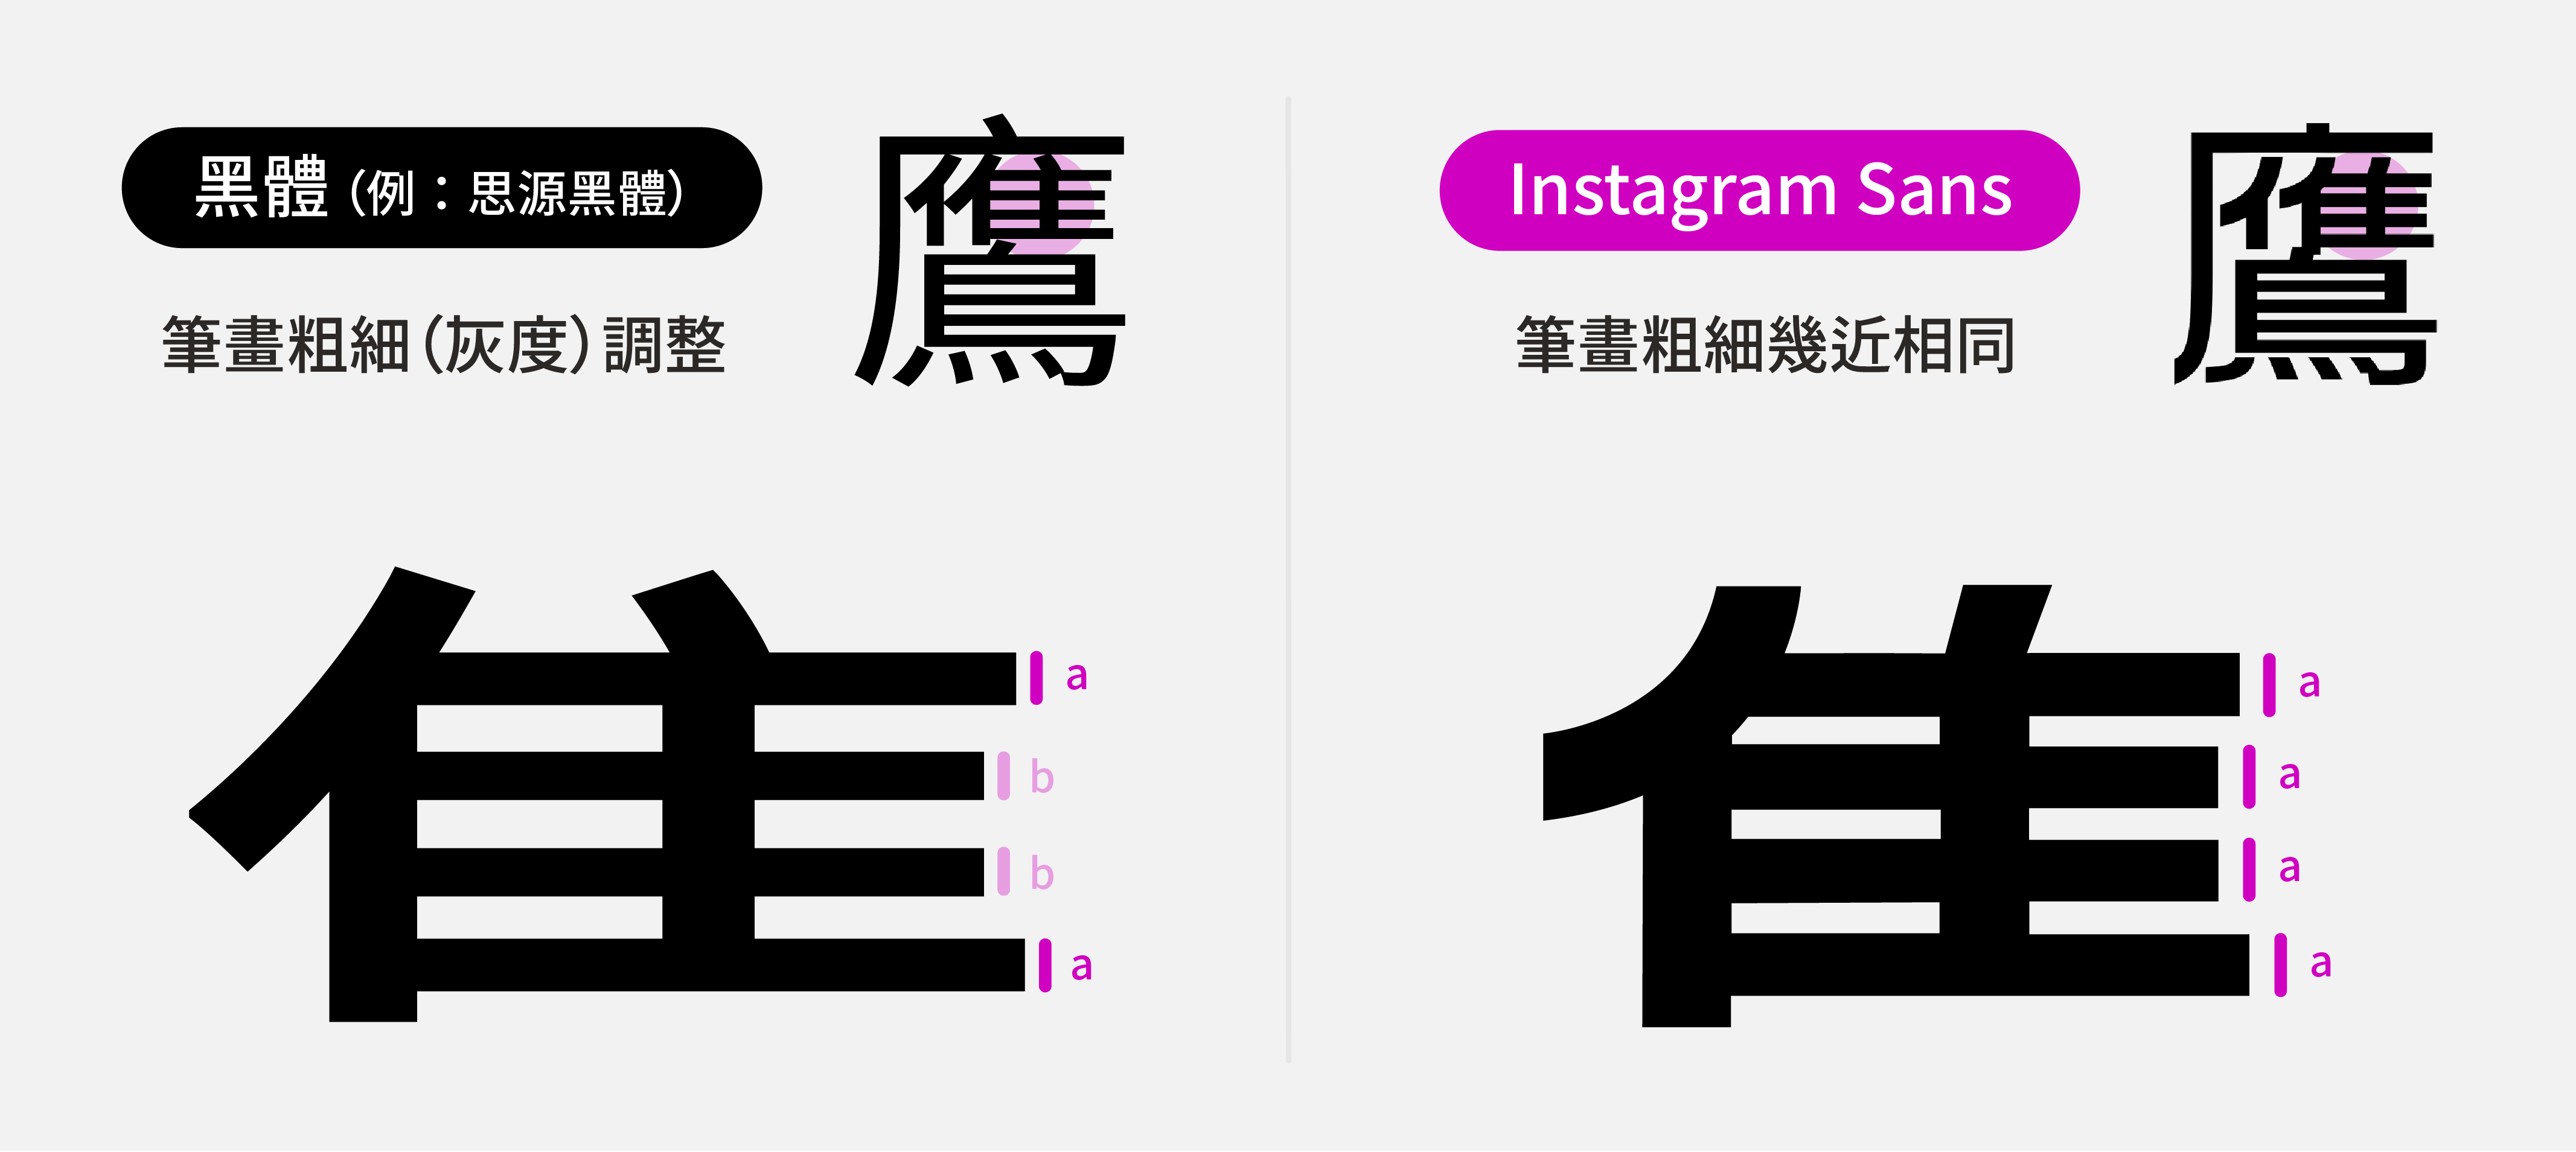 Instagram Sans 與思源黑體灰度對照